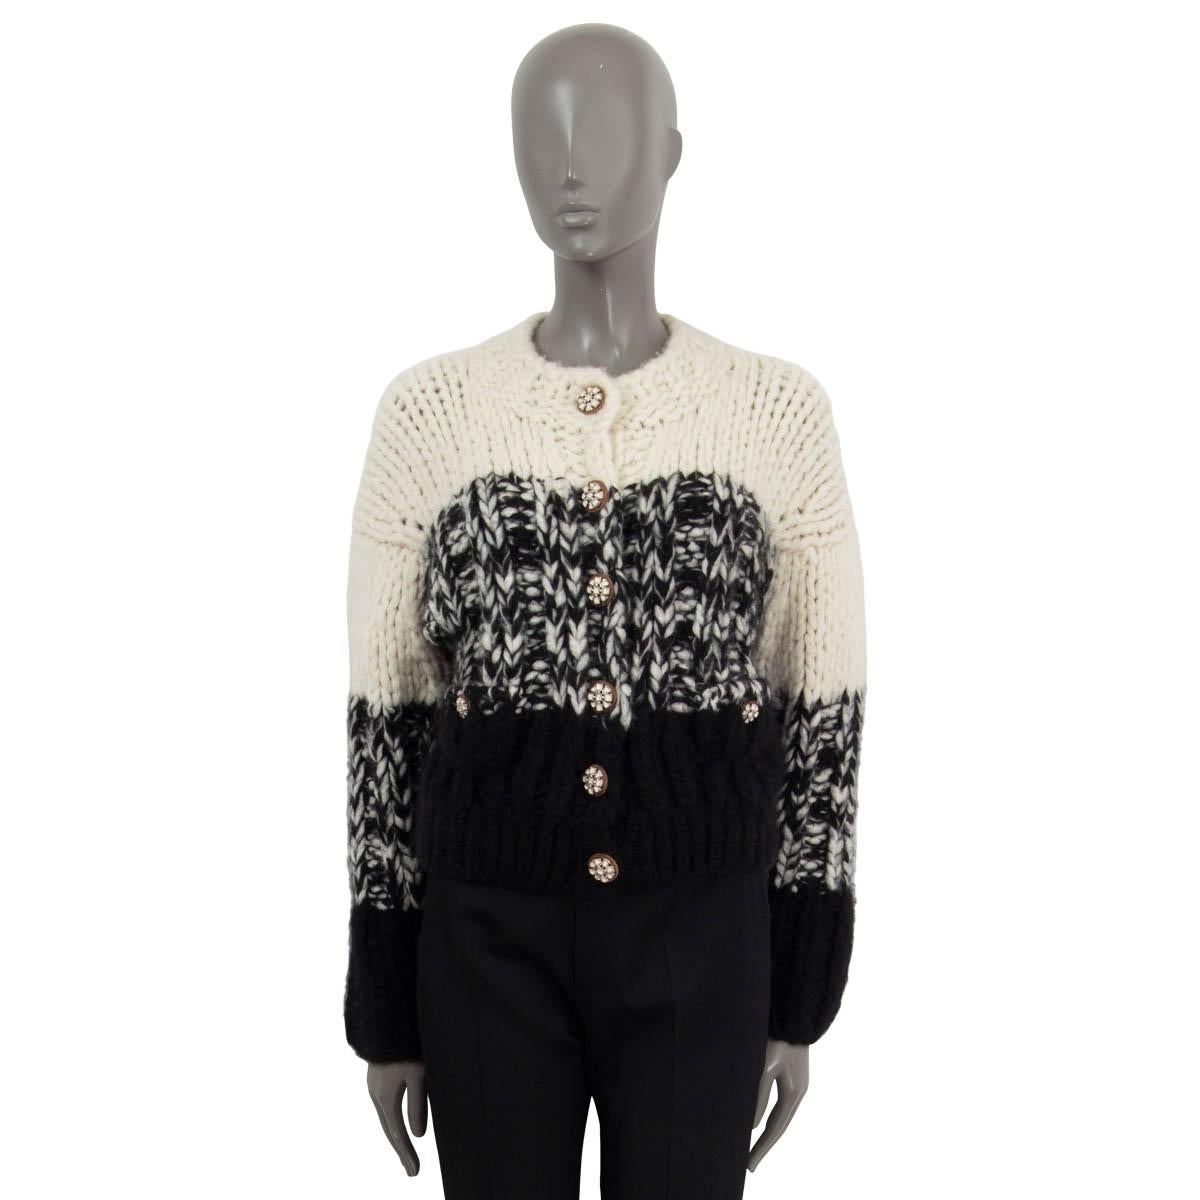 Black CHANEL black & white cashmere 2019 CHUNKY Cardigan Sweater 38 S 19K